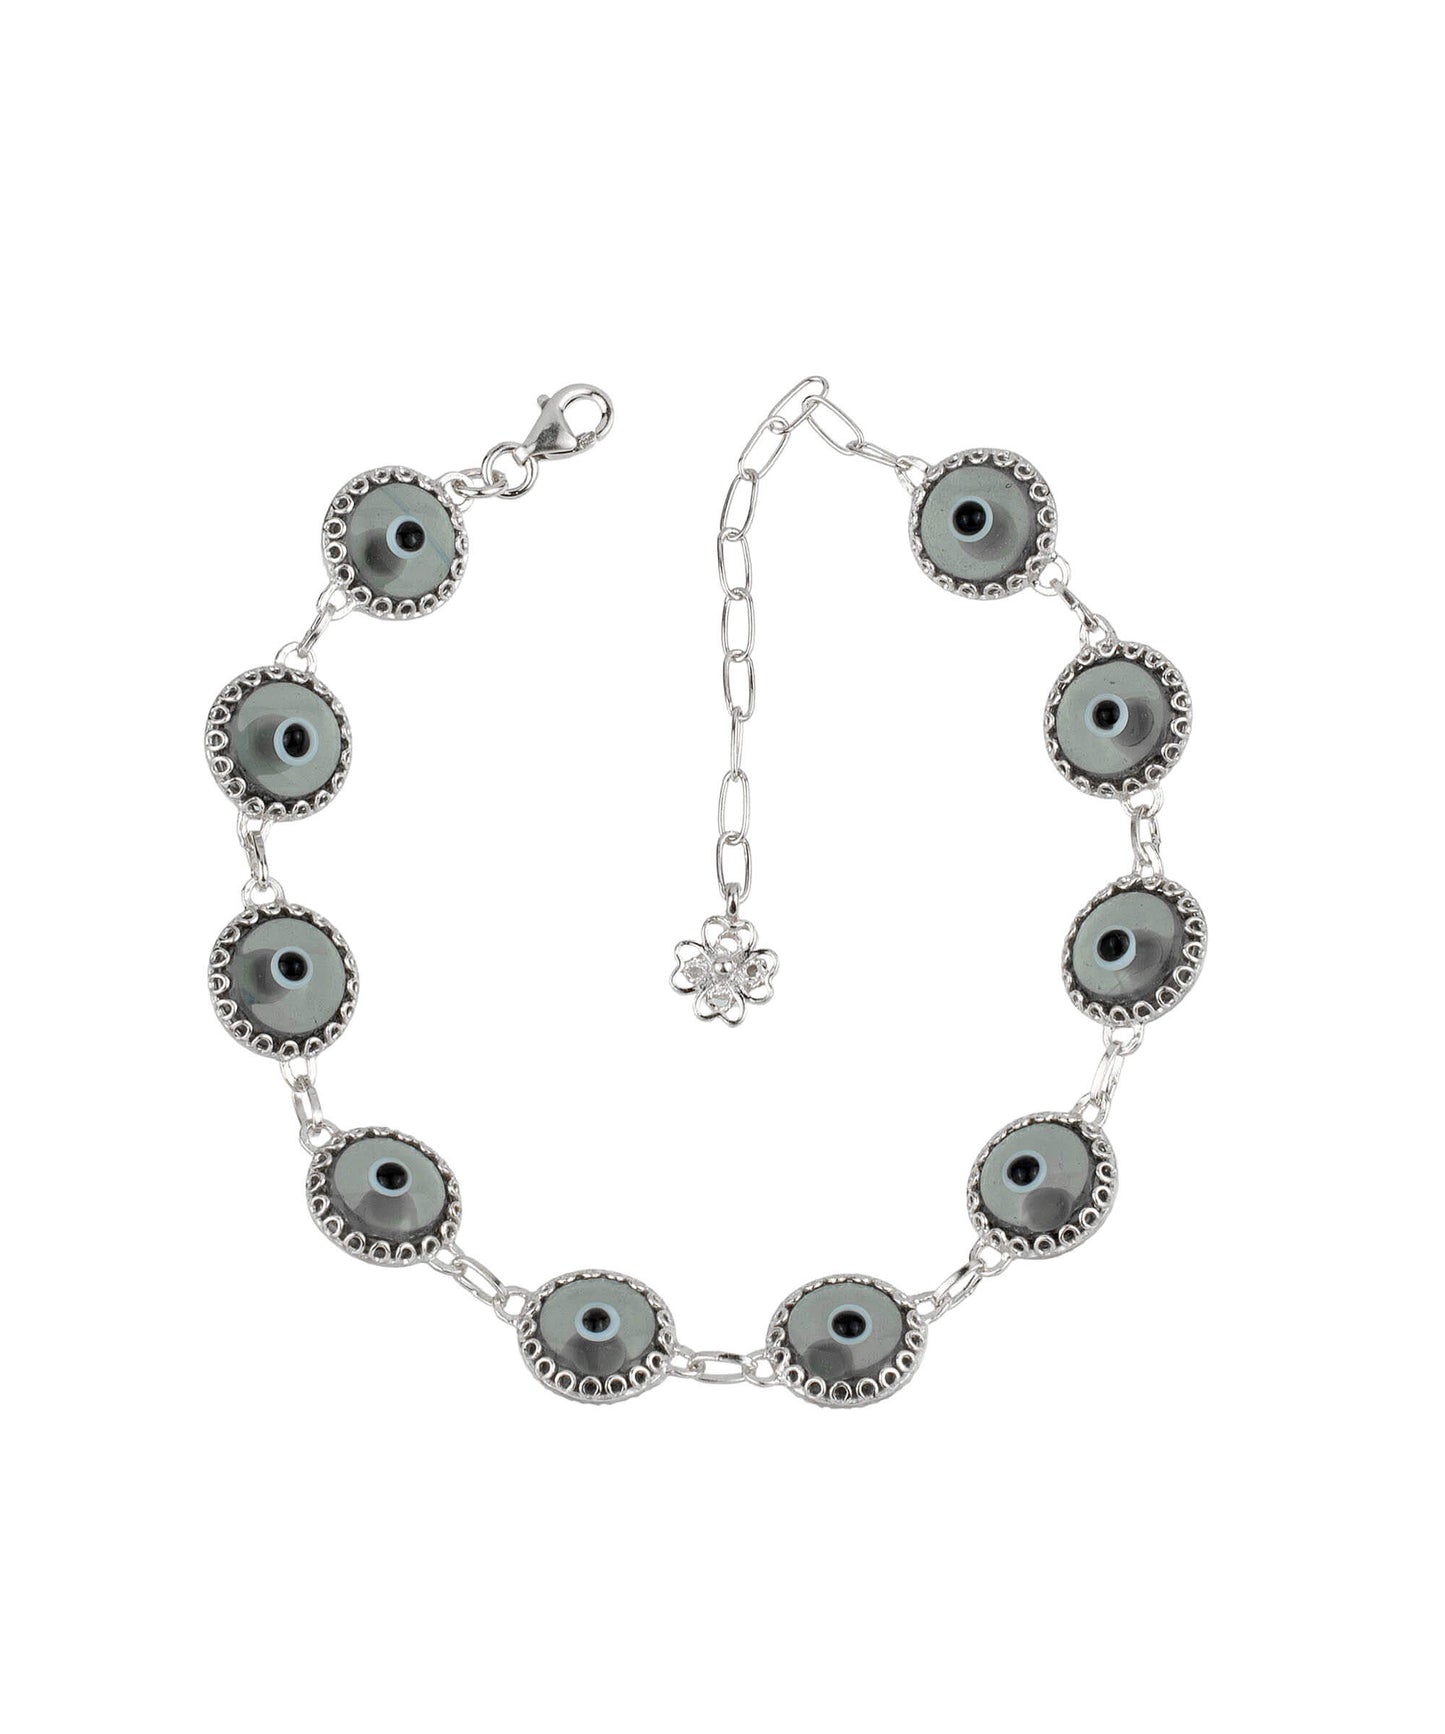 Smokey Evil Eye Woman Sterling Silver Adjustable Link Bracelet